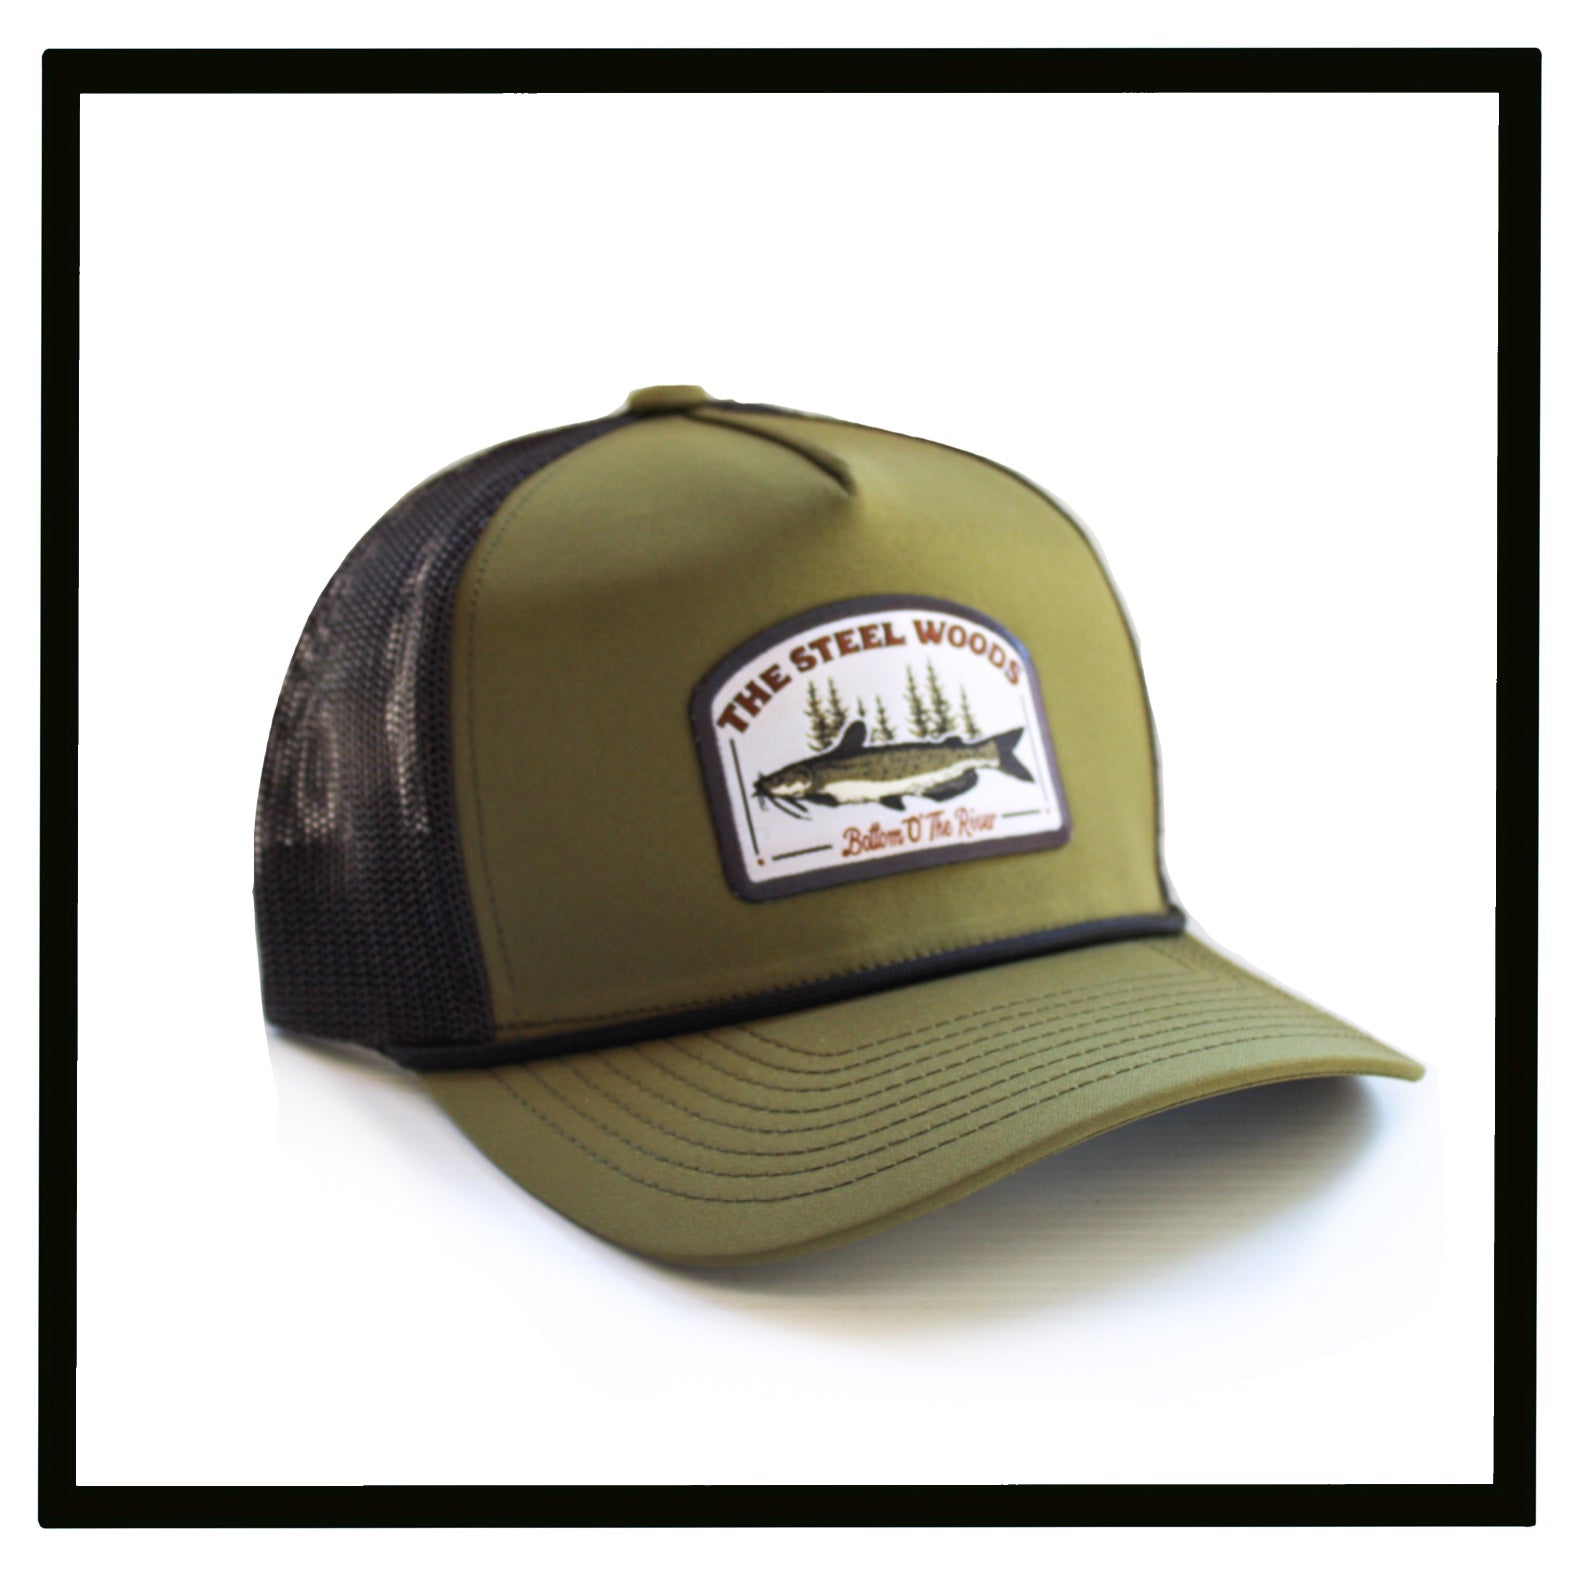 Catfish Hat – The Steel Woods